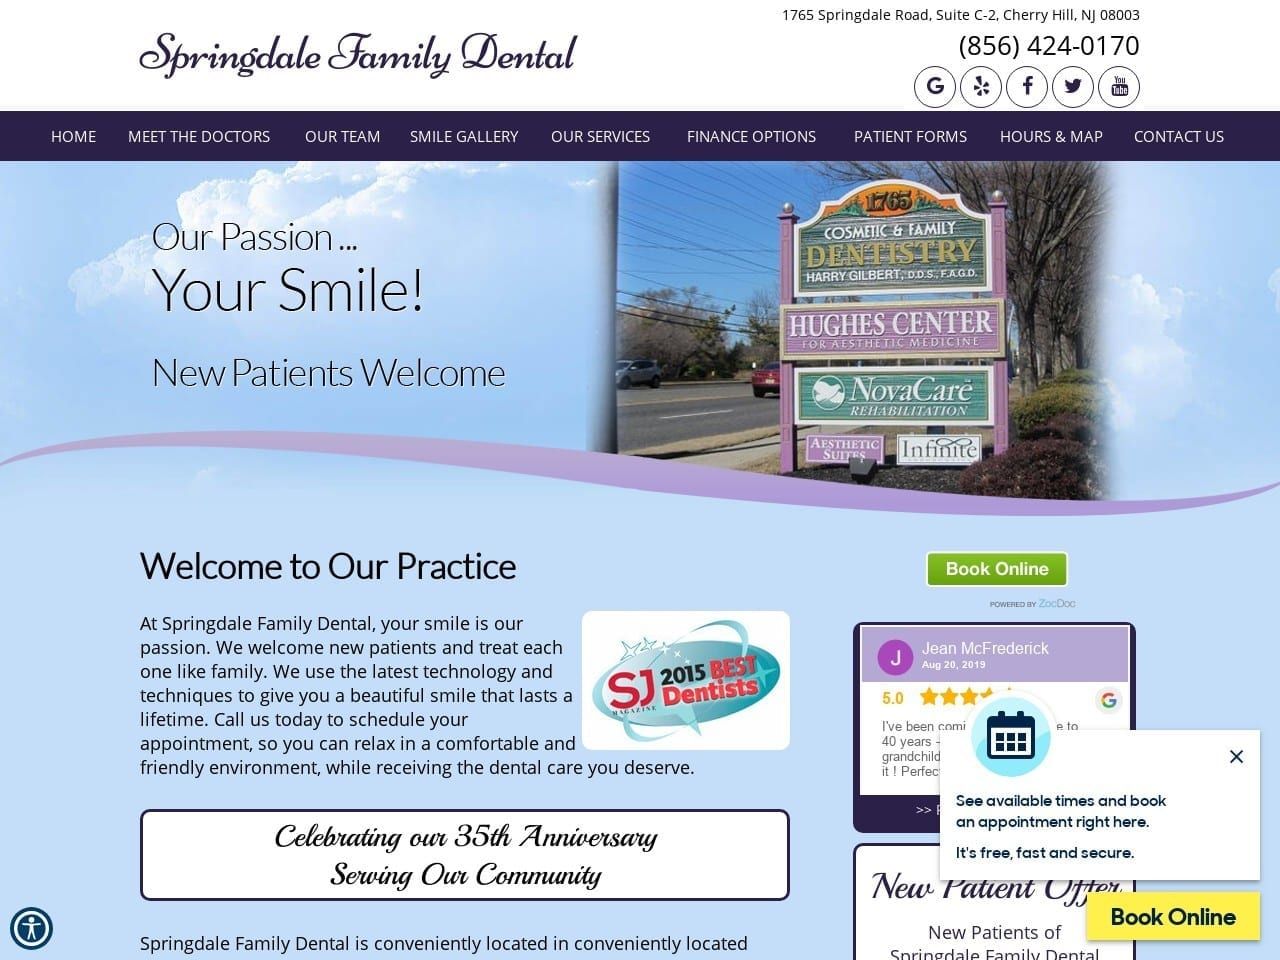 Cherryhill Smiles Website Screenshot from cherryhillsmiles.com